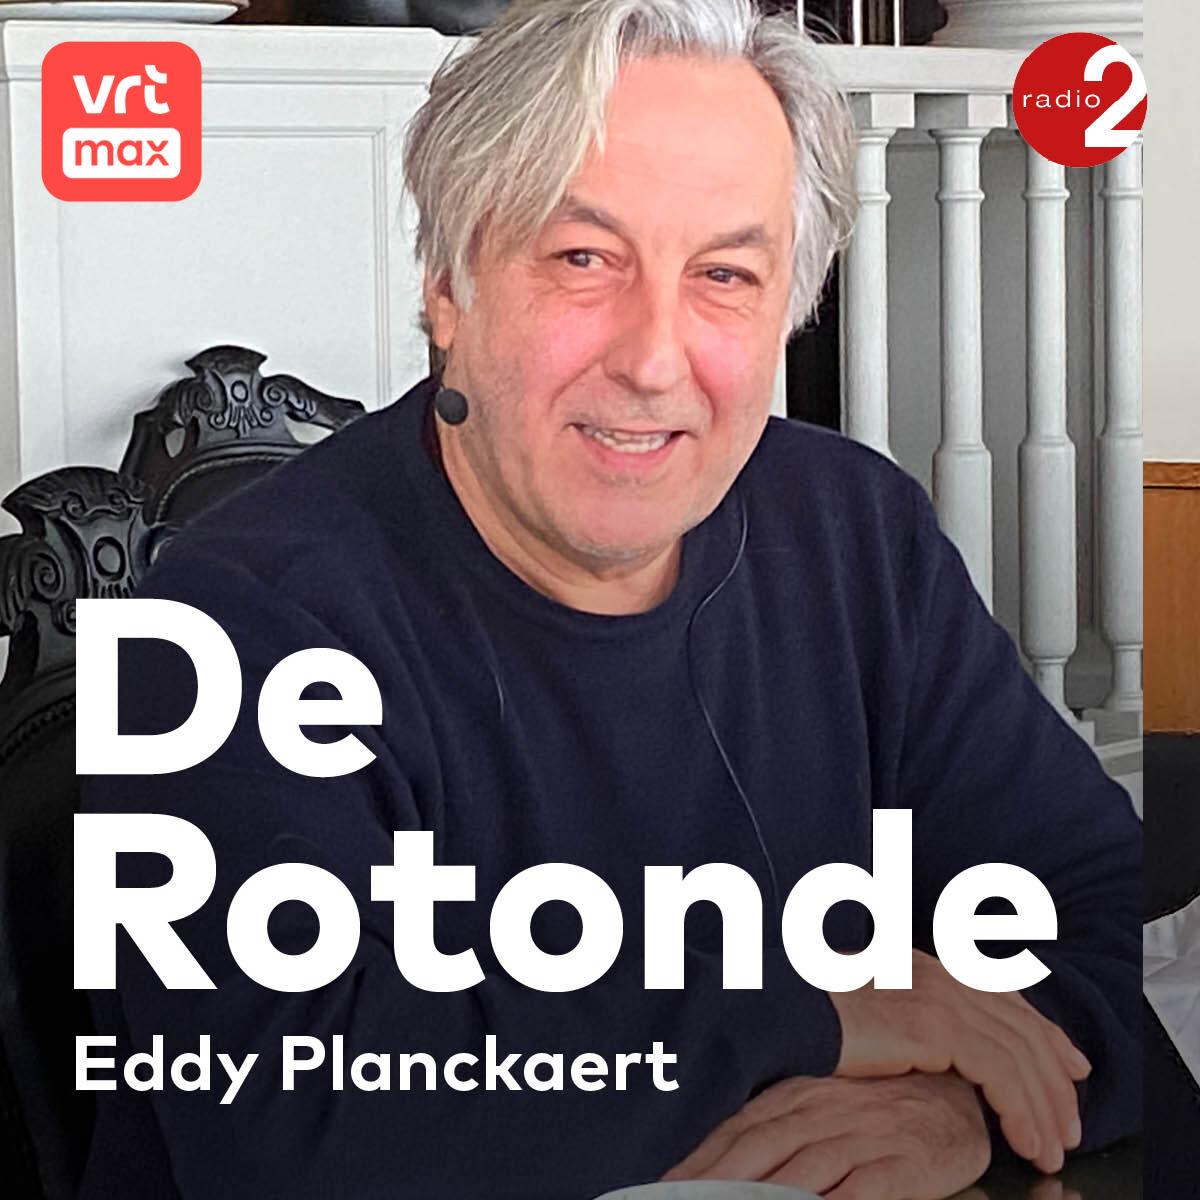 Eddy Planckaert